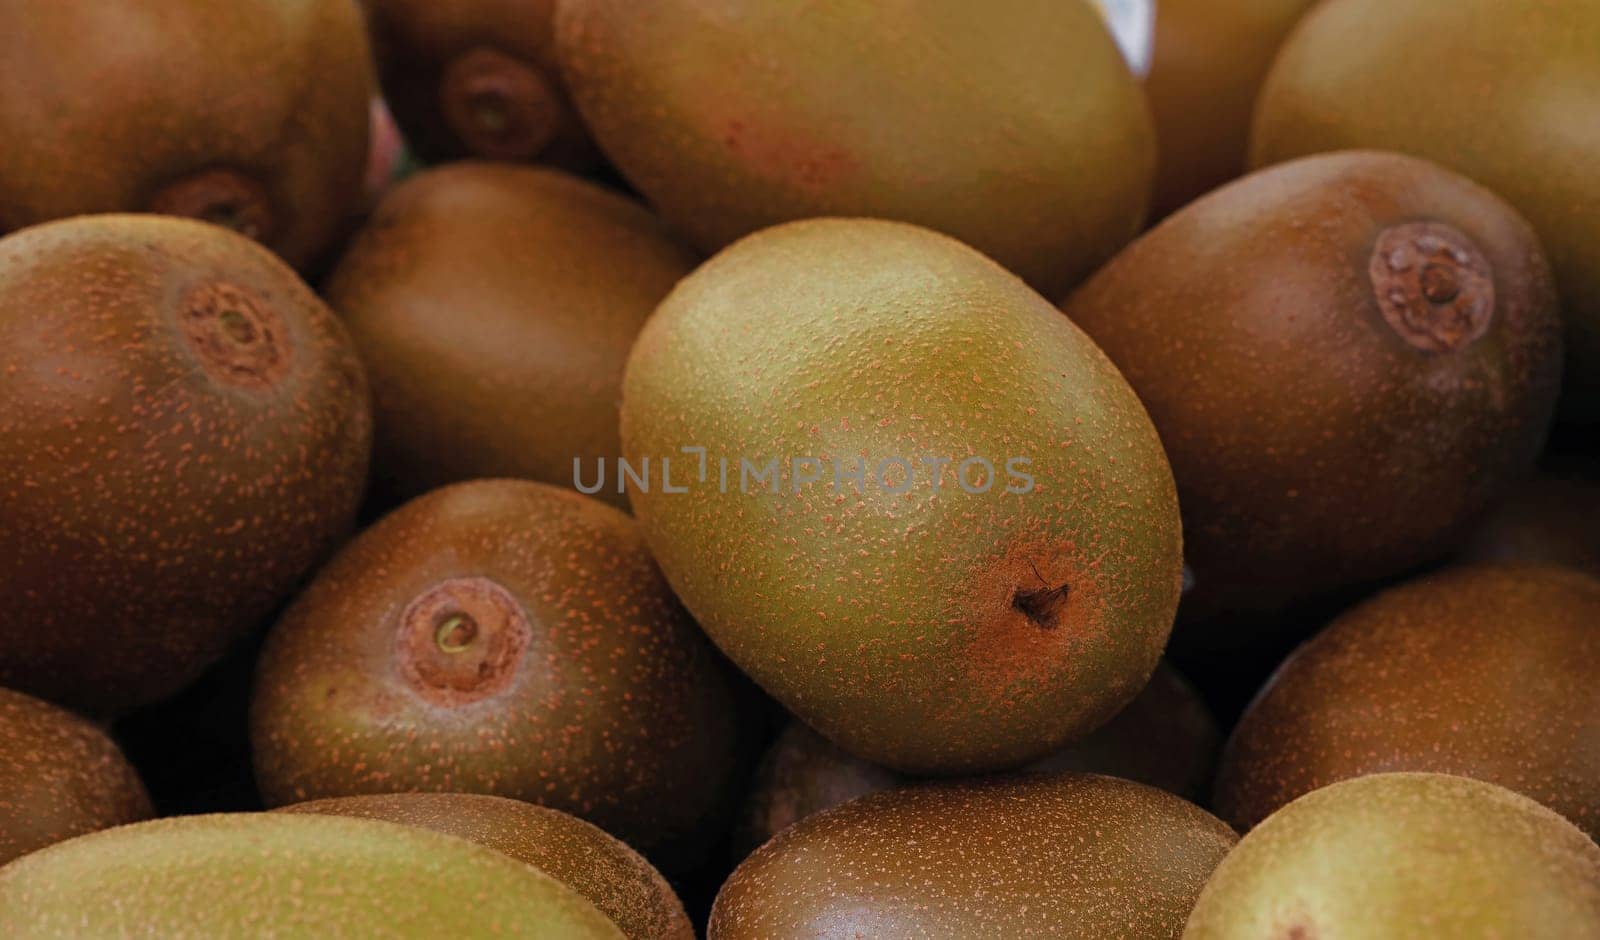 Fresh kiwi fruits on market stall by BreakingTheWalls